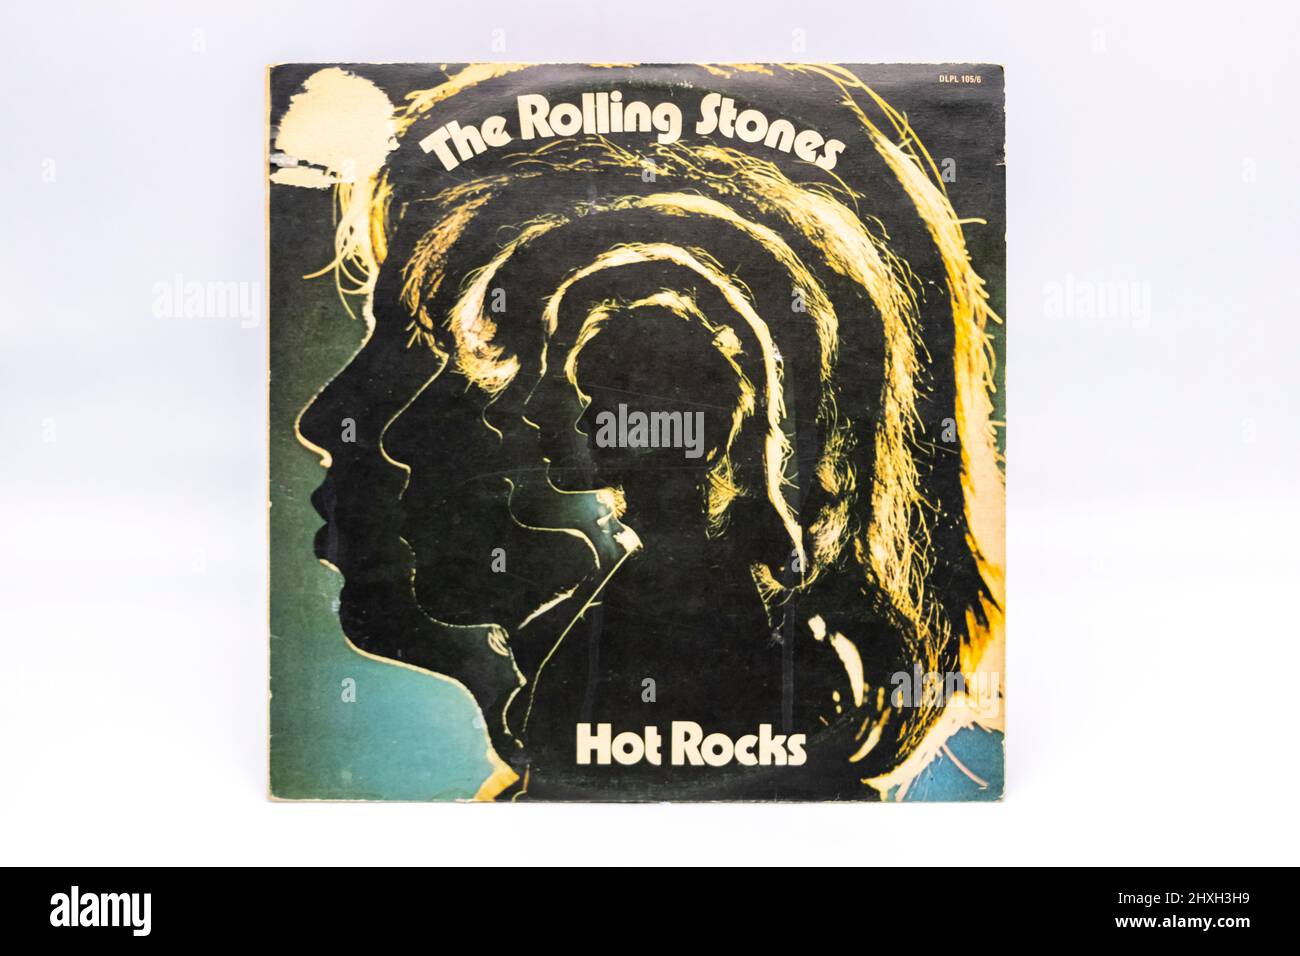 Rolling Stones Hot Rocks vinyl LP record cover Stock Photo